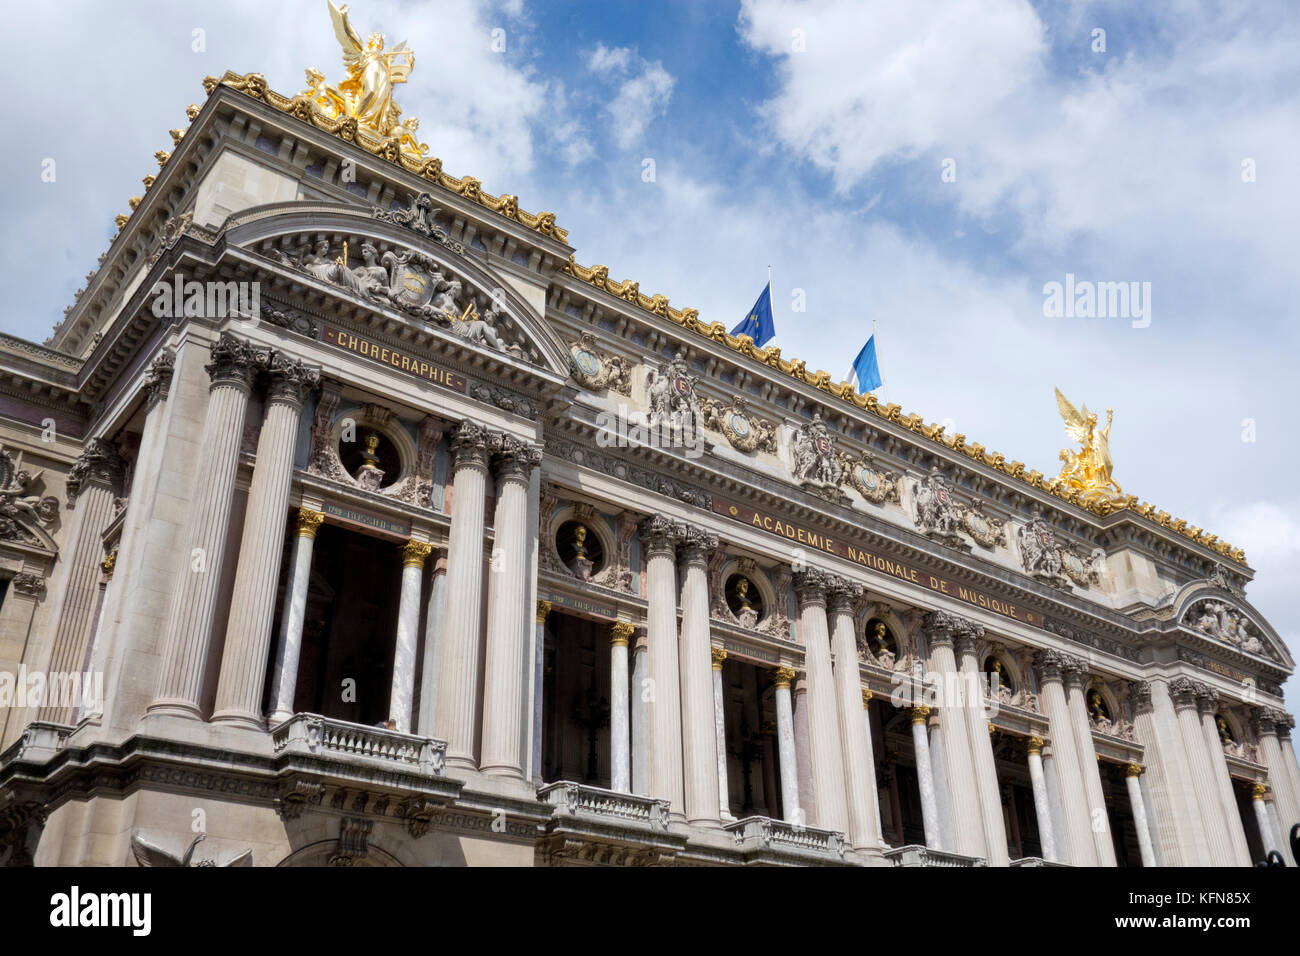 The Palais Garnier, or Paris Opera House, Paris, 2017. Stock Photo